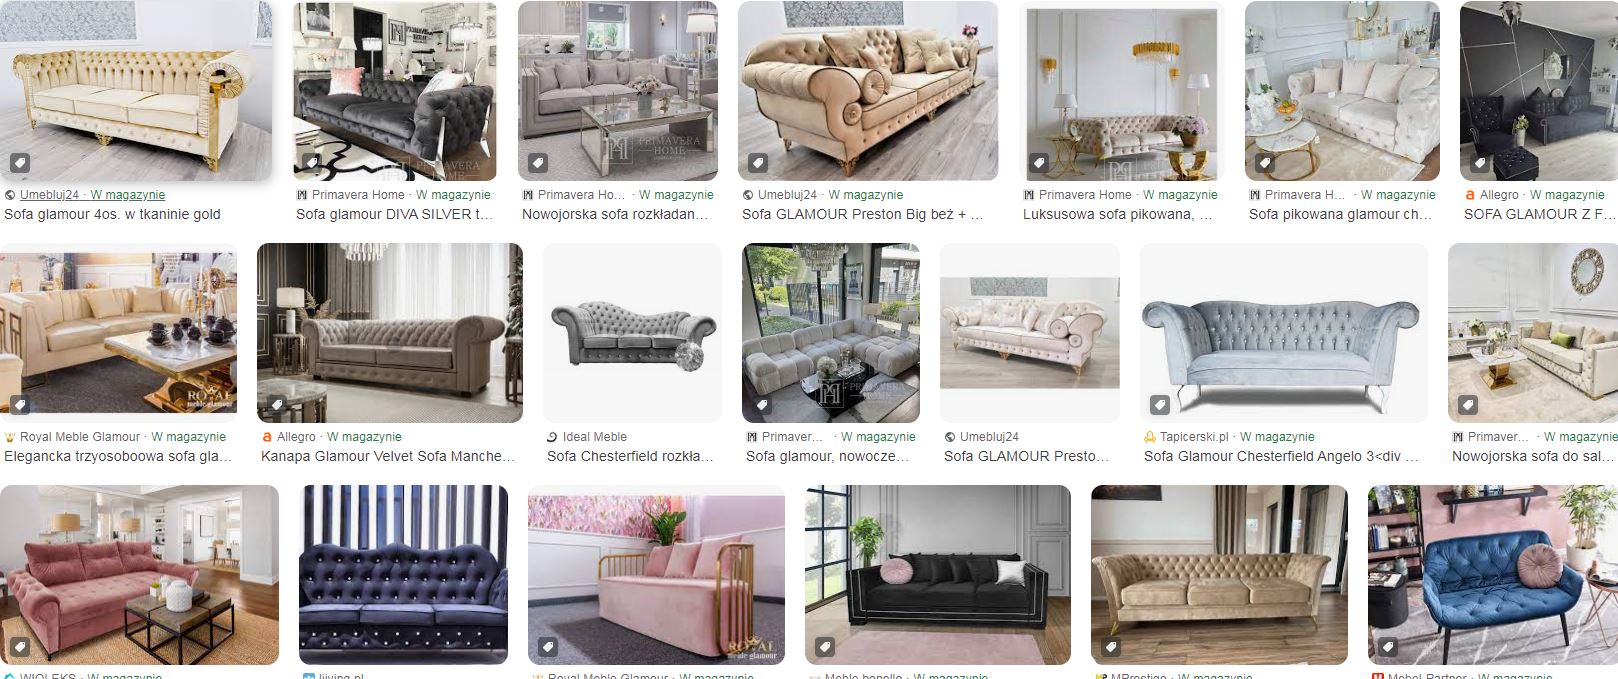 sofa glamour sofa chesterfield